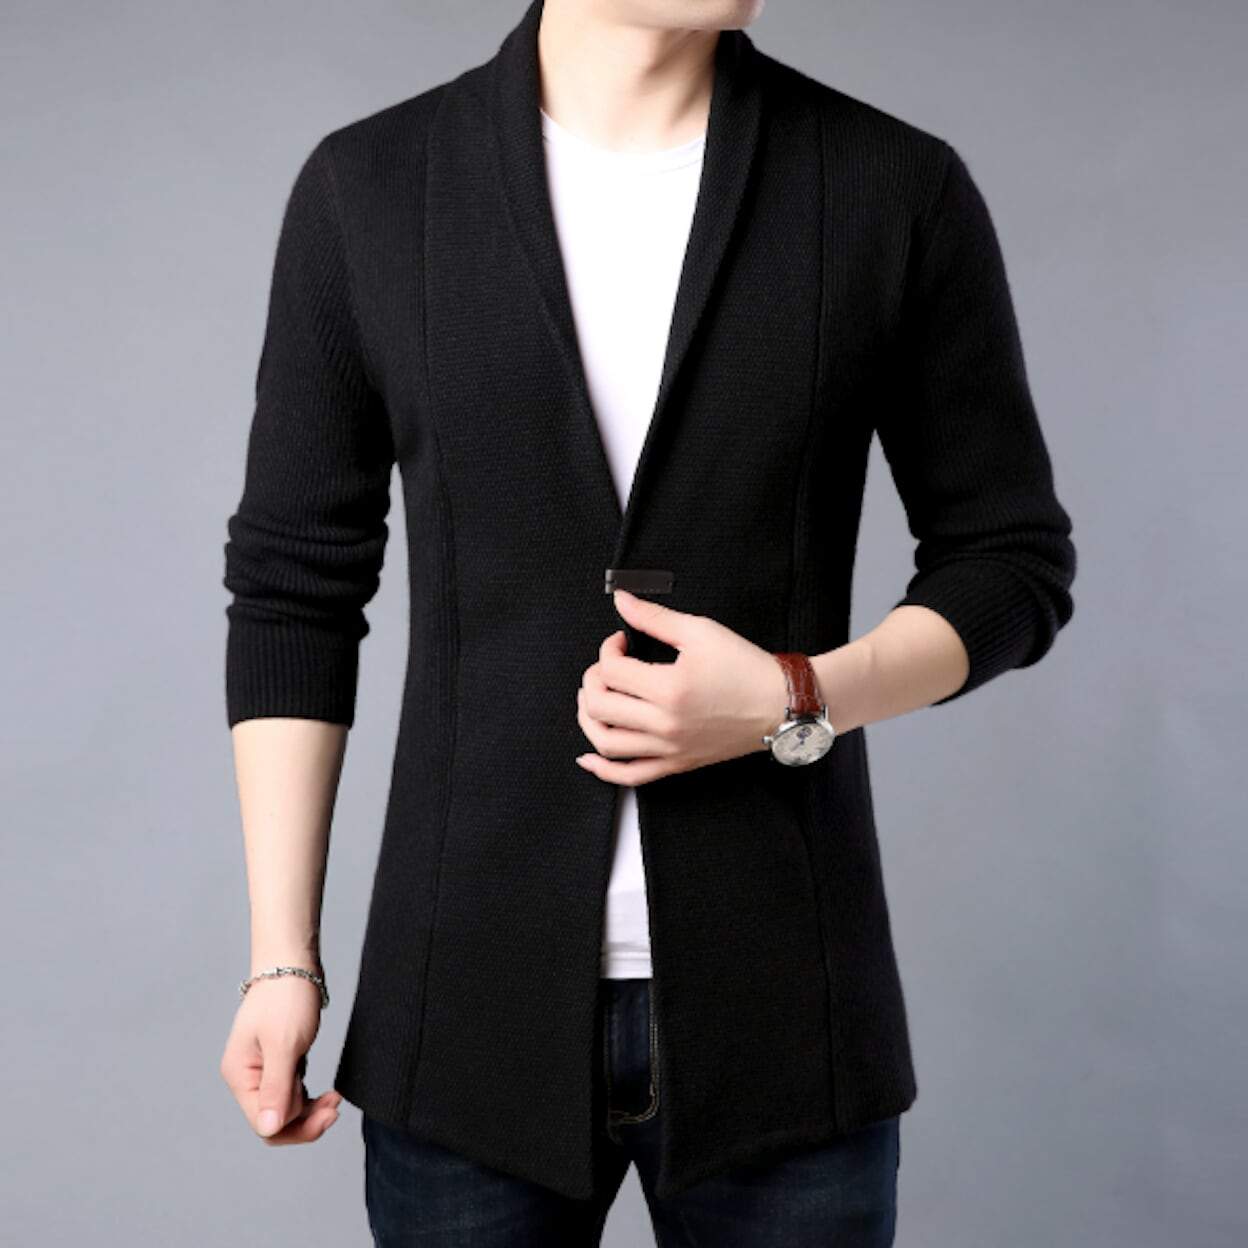 mens black shawl collar cardigan sweater - AmtifyDirect